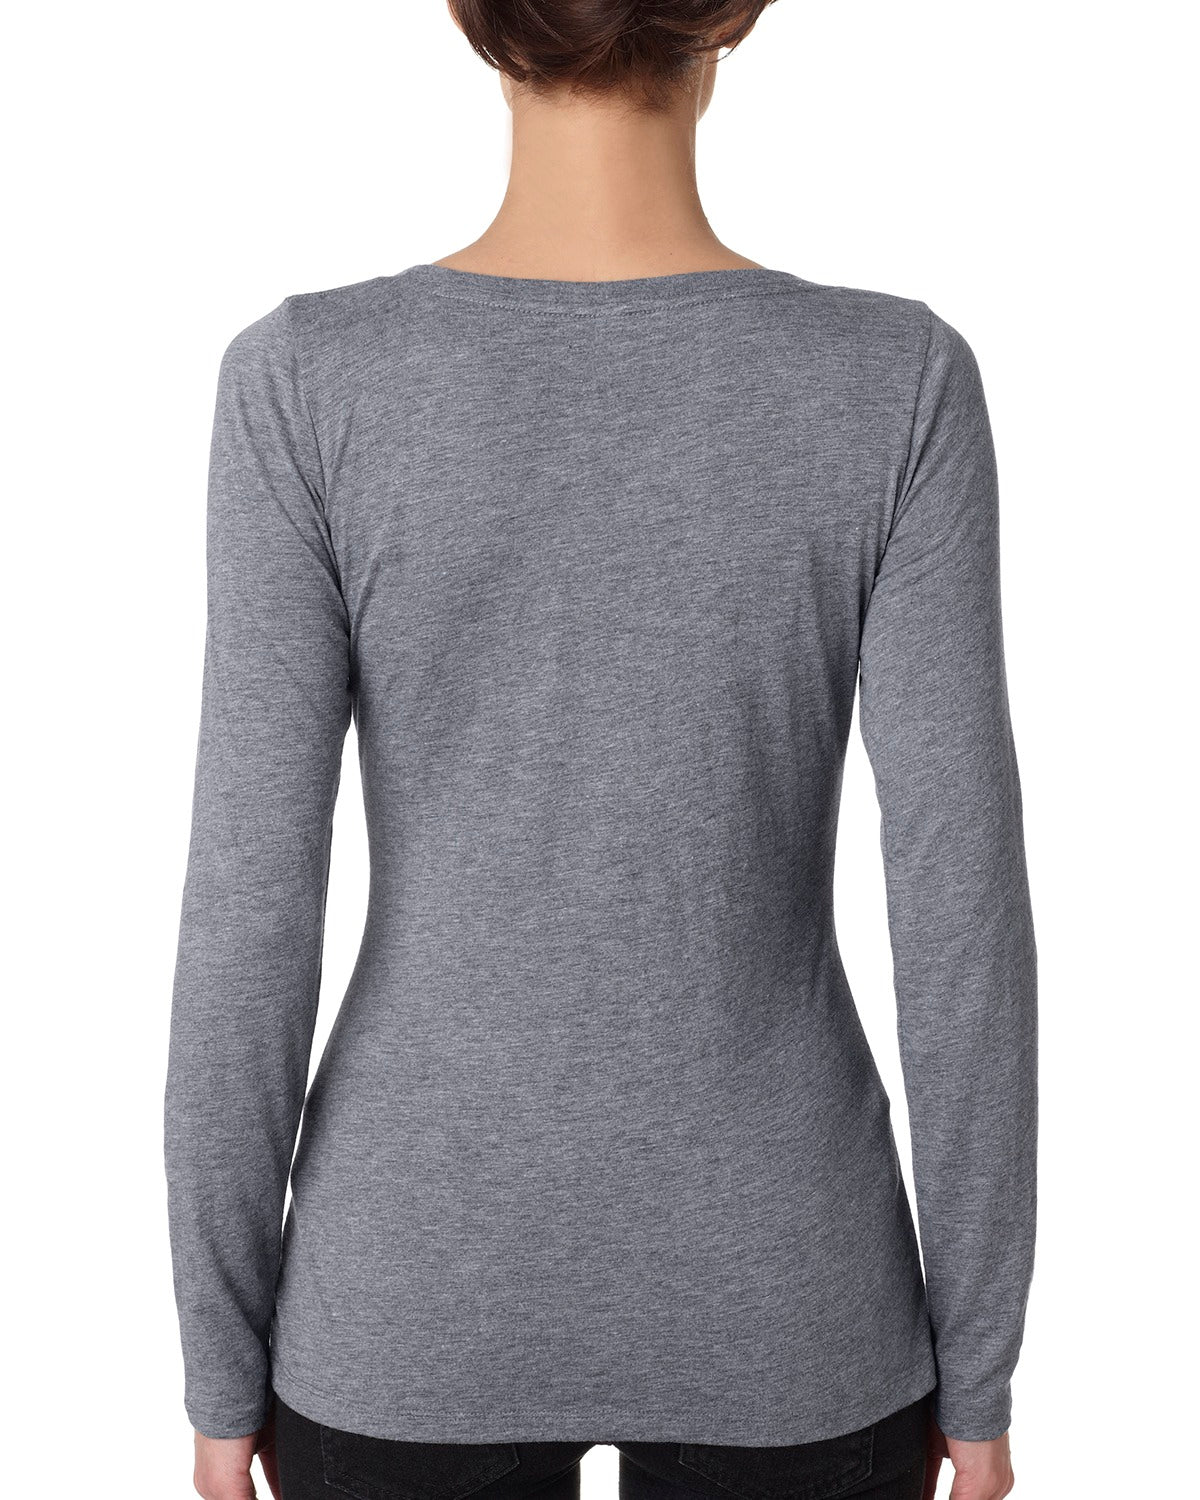 Elephant Spirit Shirt - Long-Sleeve Scoop Neck Grey